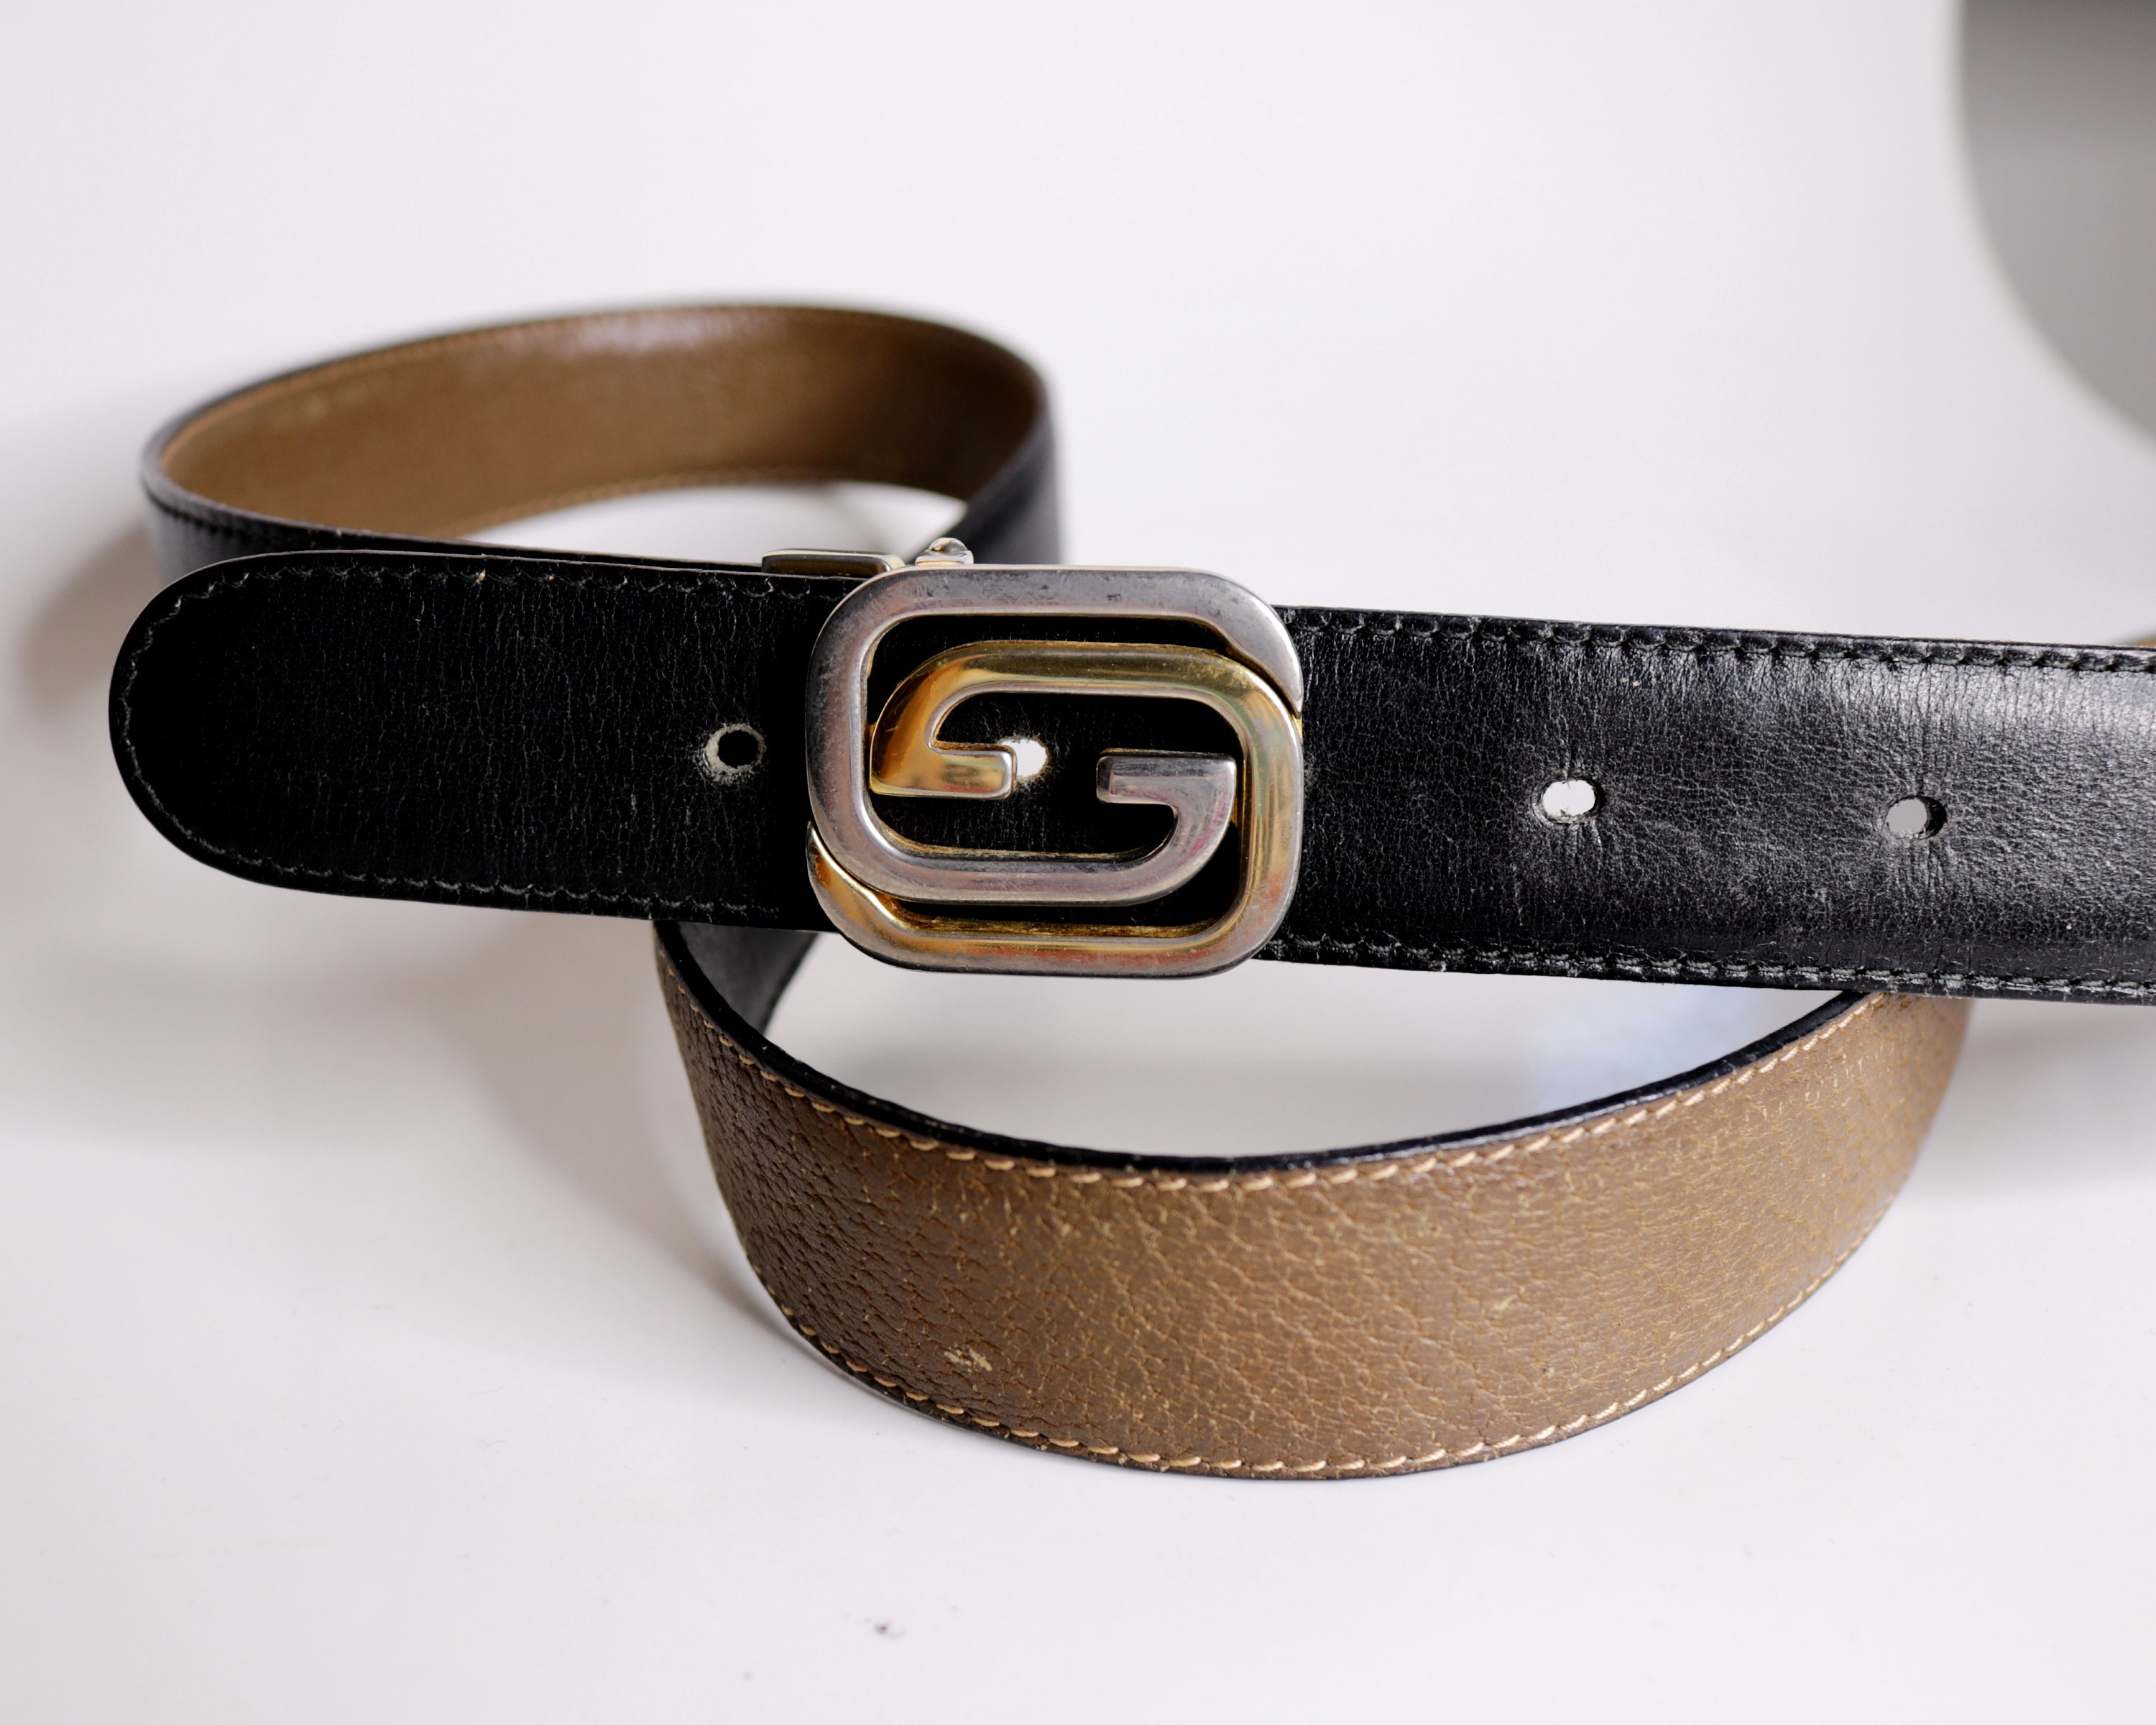 Designer Belts Classic Lv's Top Luxury Quality Original Gucc's Gg